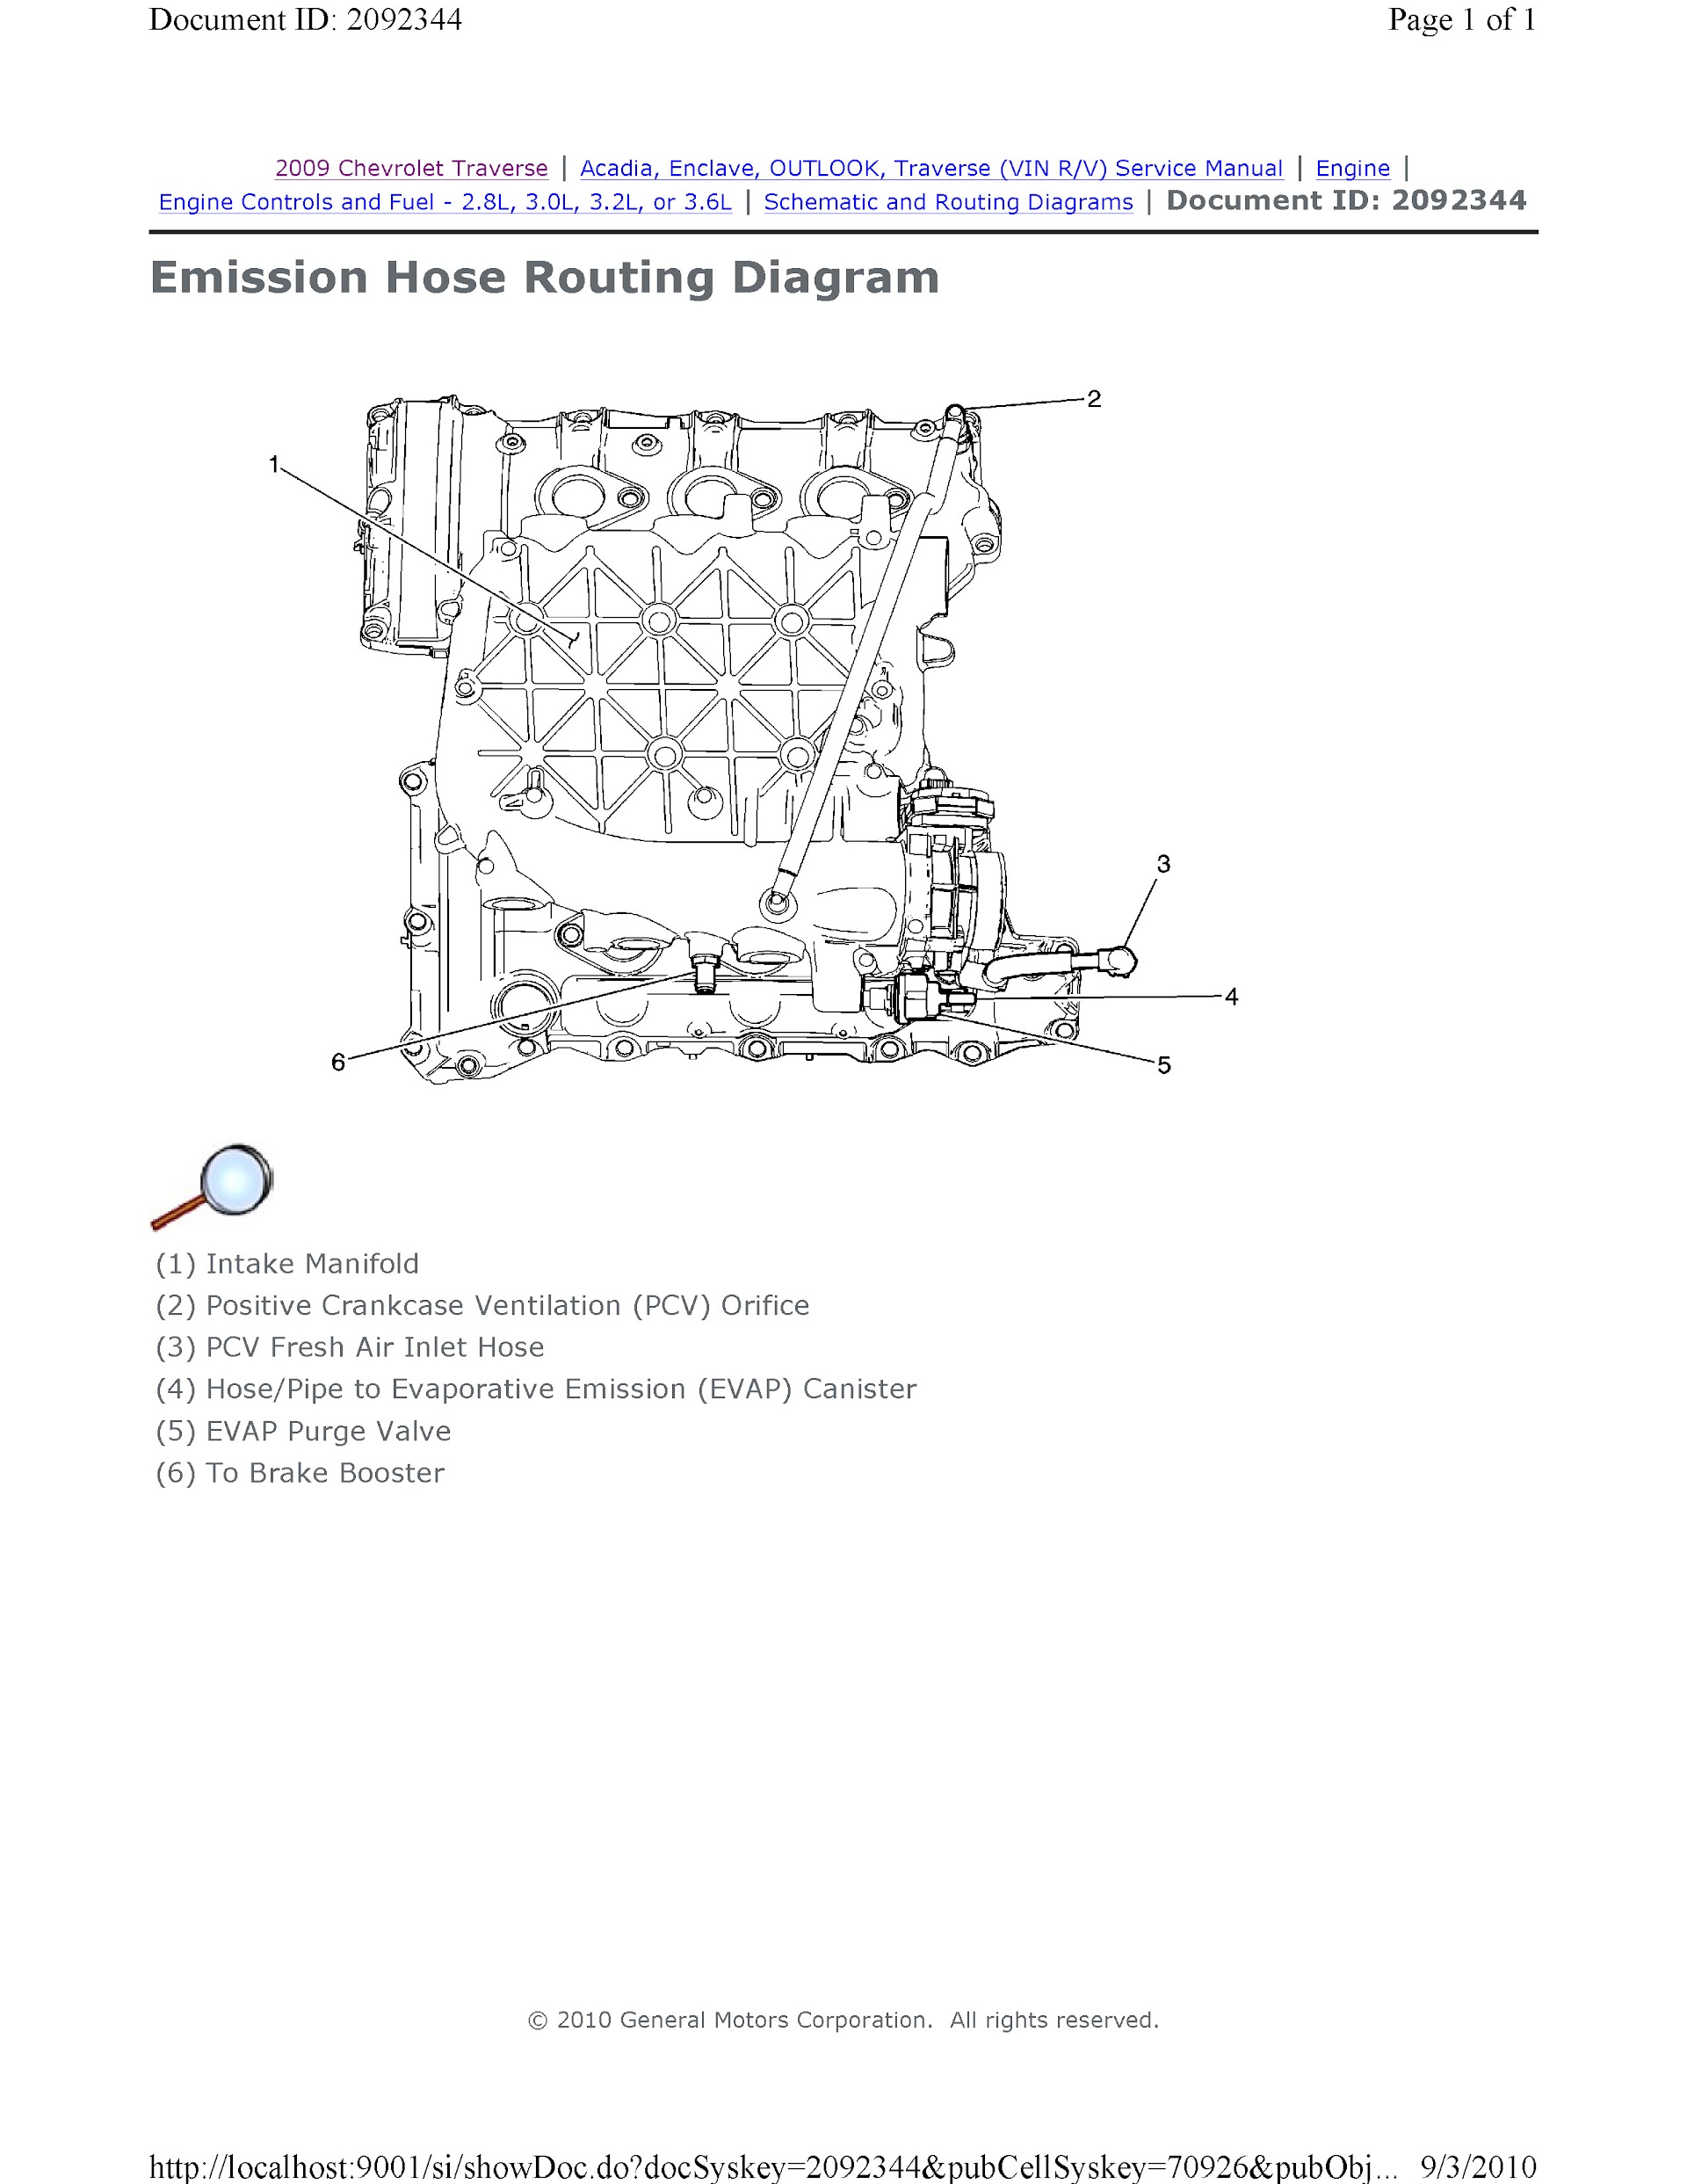 CONTENTS: 2009-2010 Chevrolet Traverse Repair Manual, Emission Hose Routing Diagram